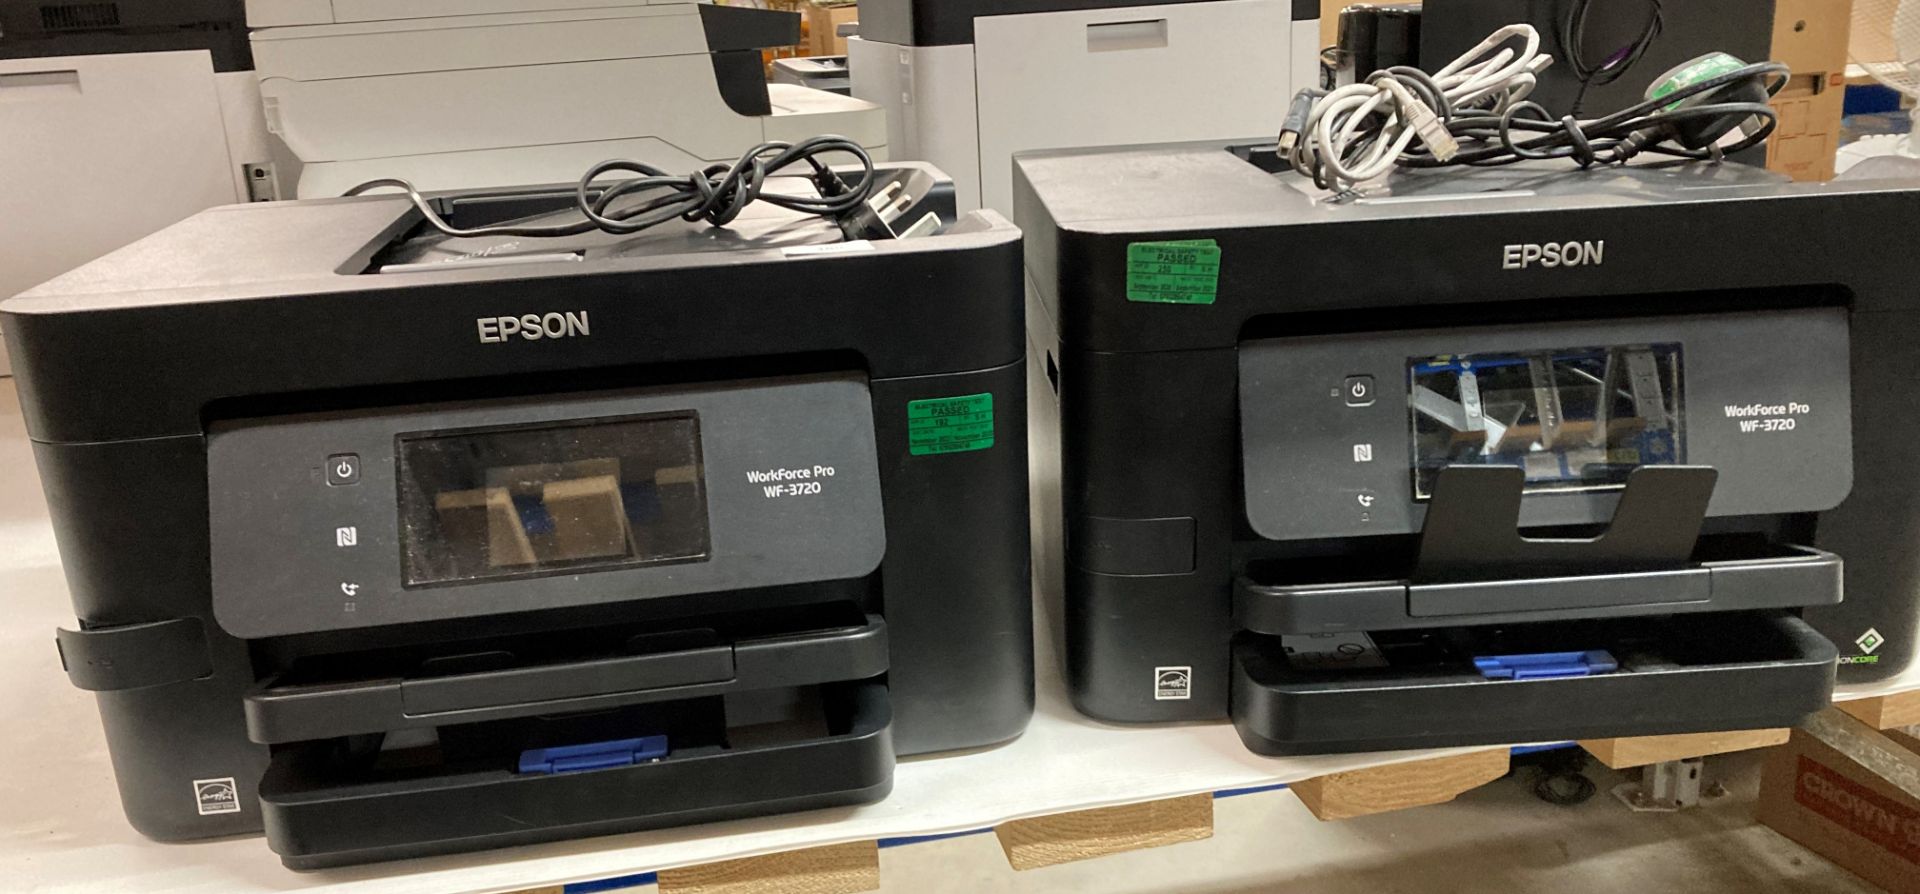 2 x Epson Workforce Pro WF-3720 printer copiers (saleroom location: J12)